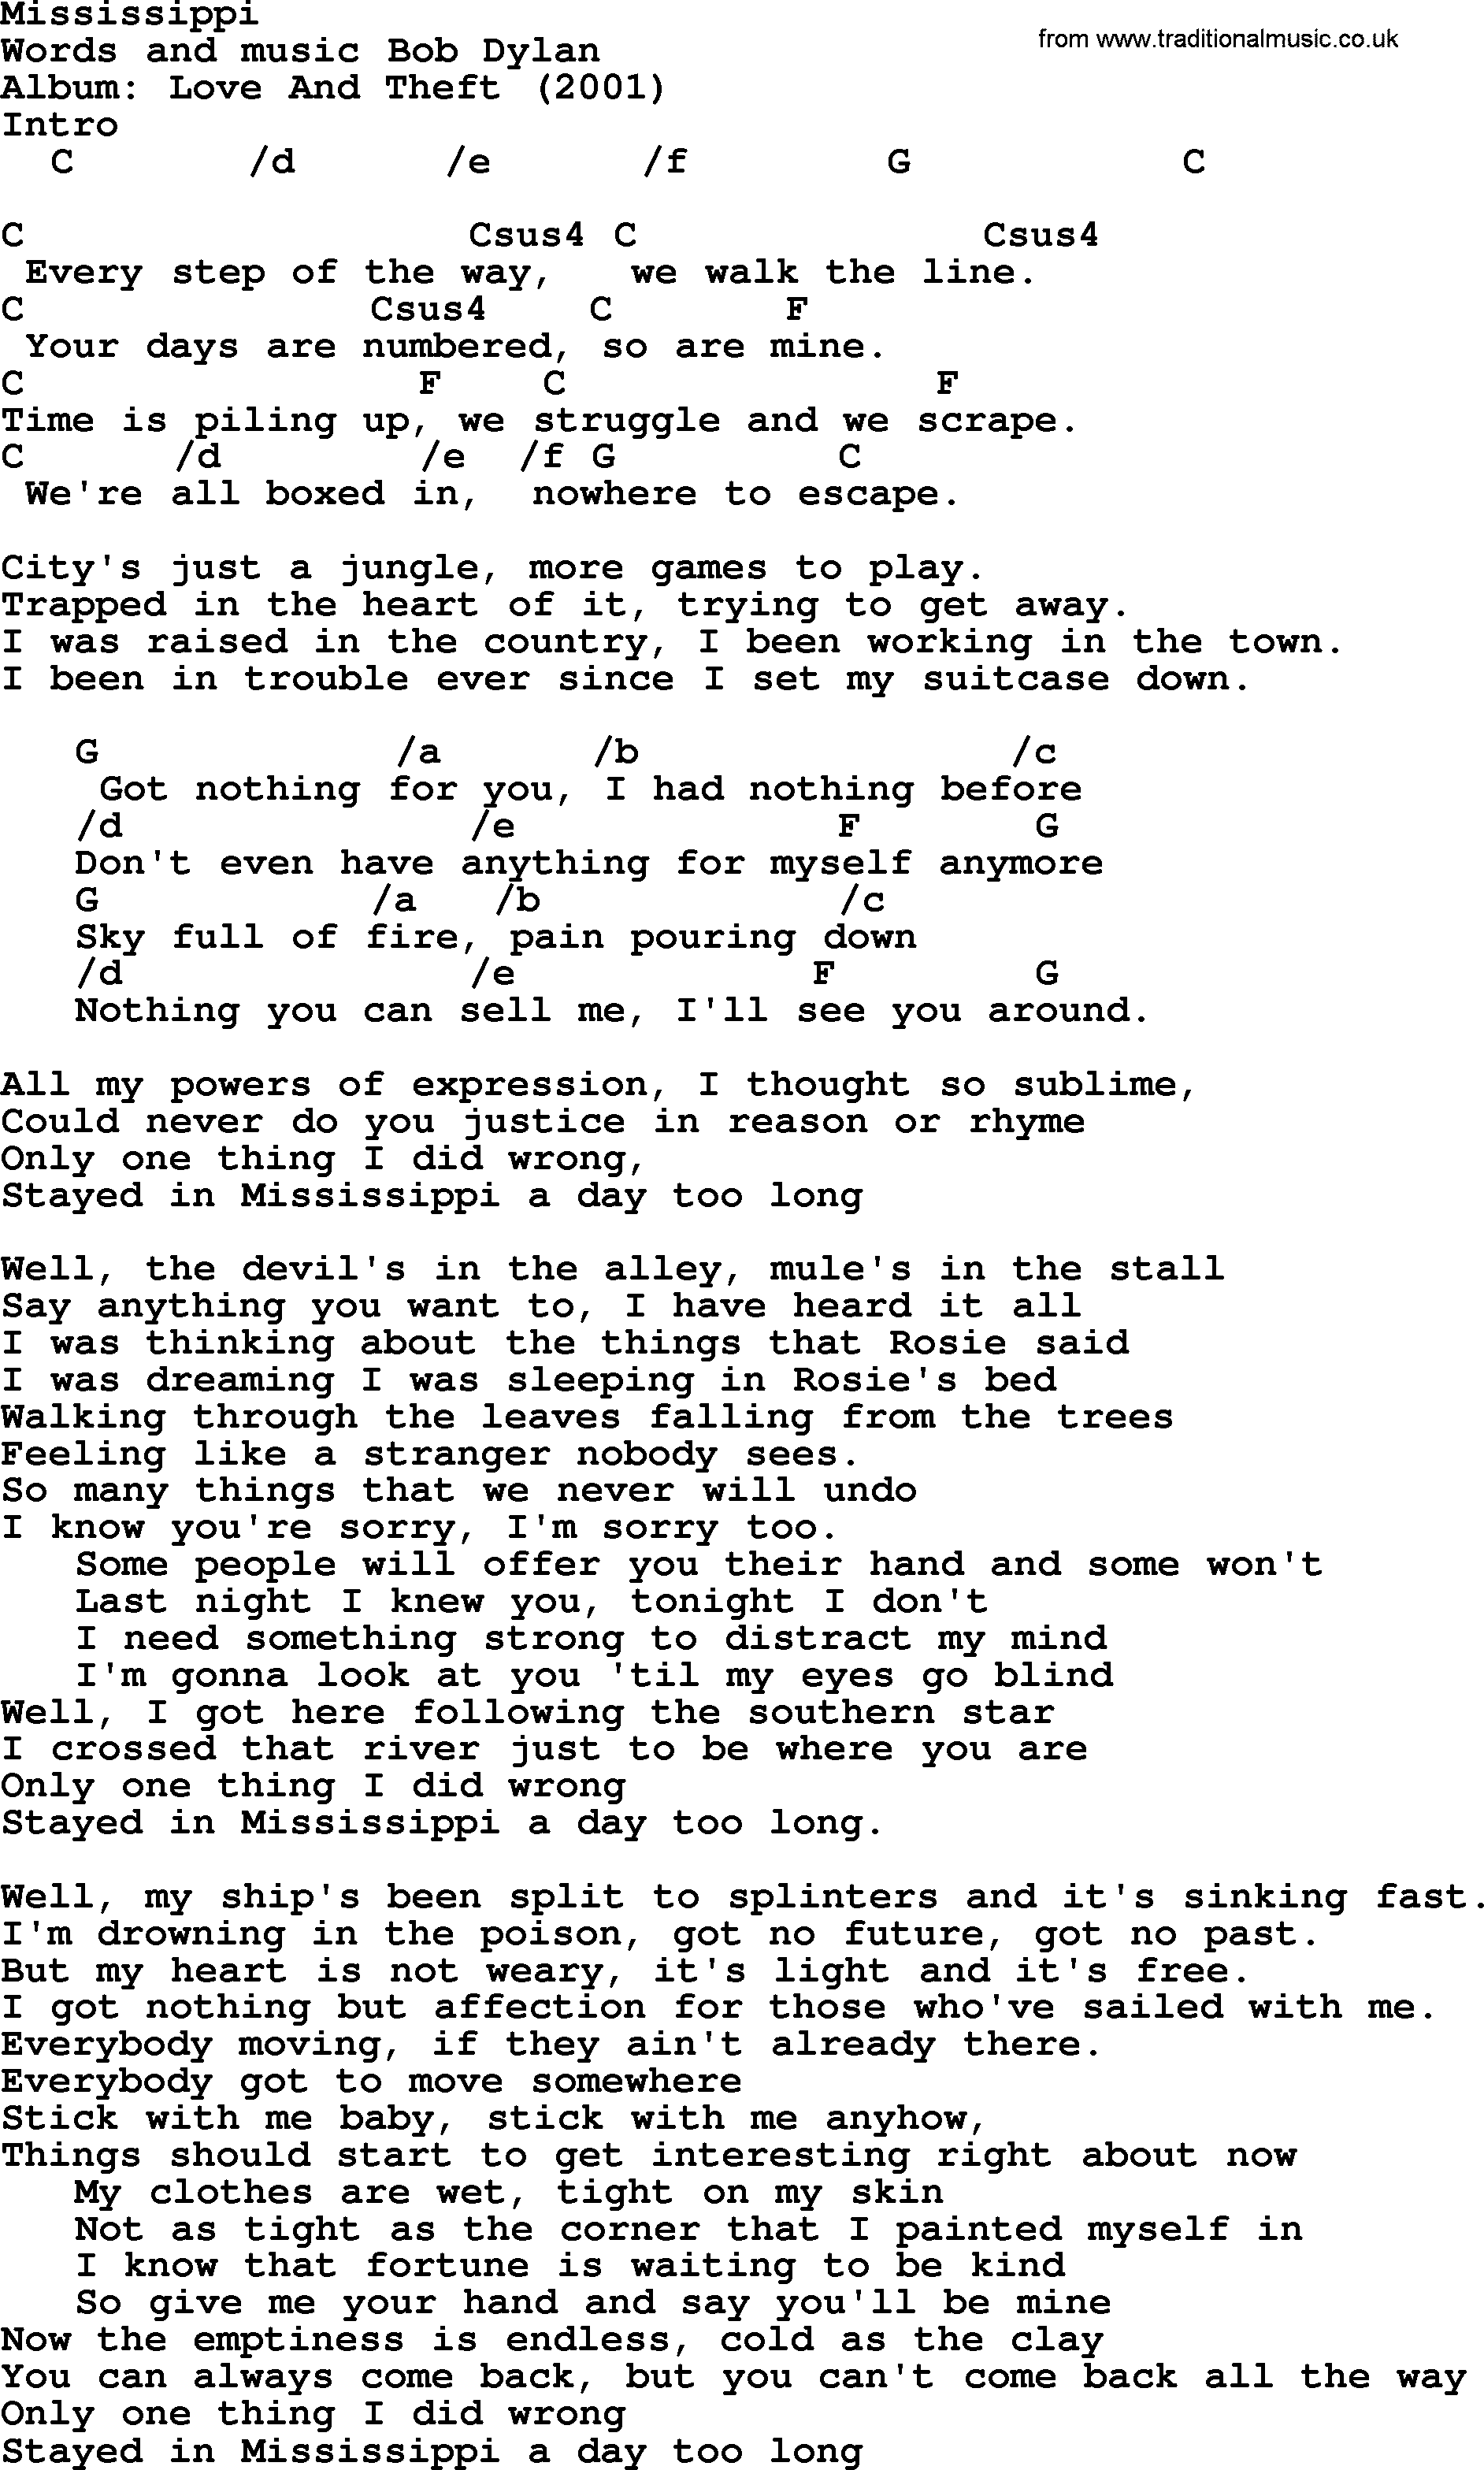 Bob Dylan song, lyrics with chords - Mississippi